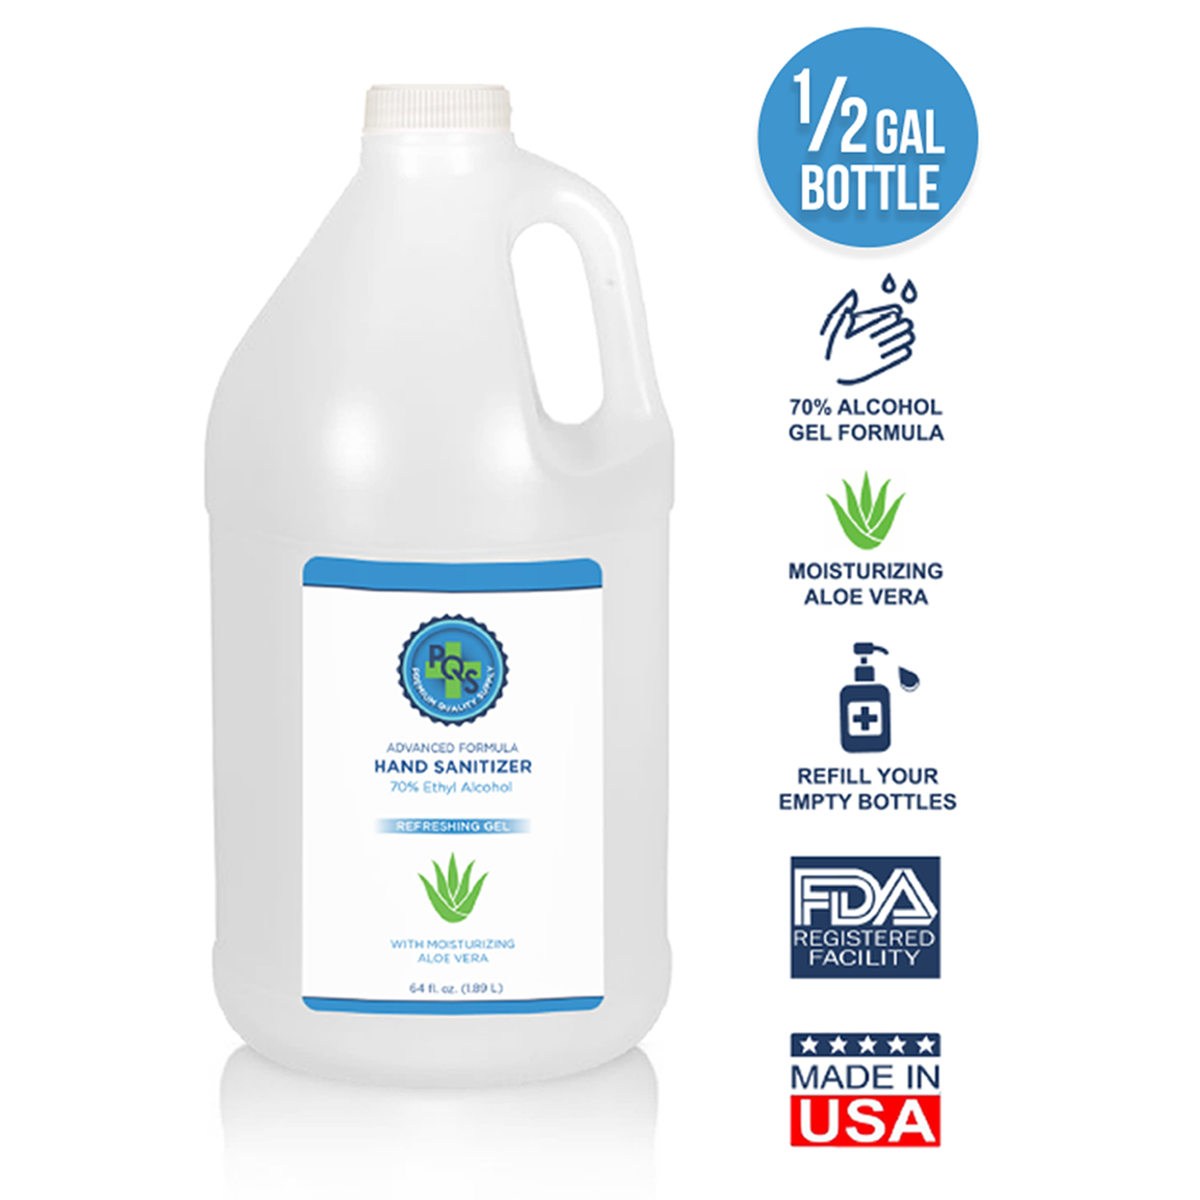 Hand Sanitizer Gel 1/2 Gallon Jug Refill - 70% Alcohol w/ Aloe & Lemon Scent: Made in USA: FDA reg. Facility